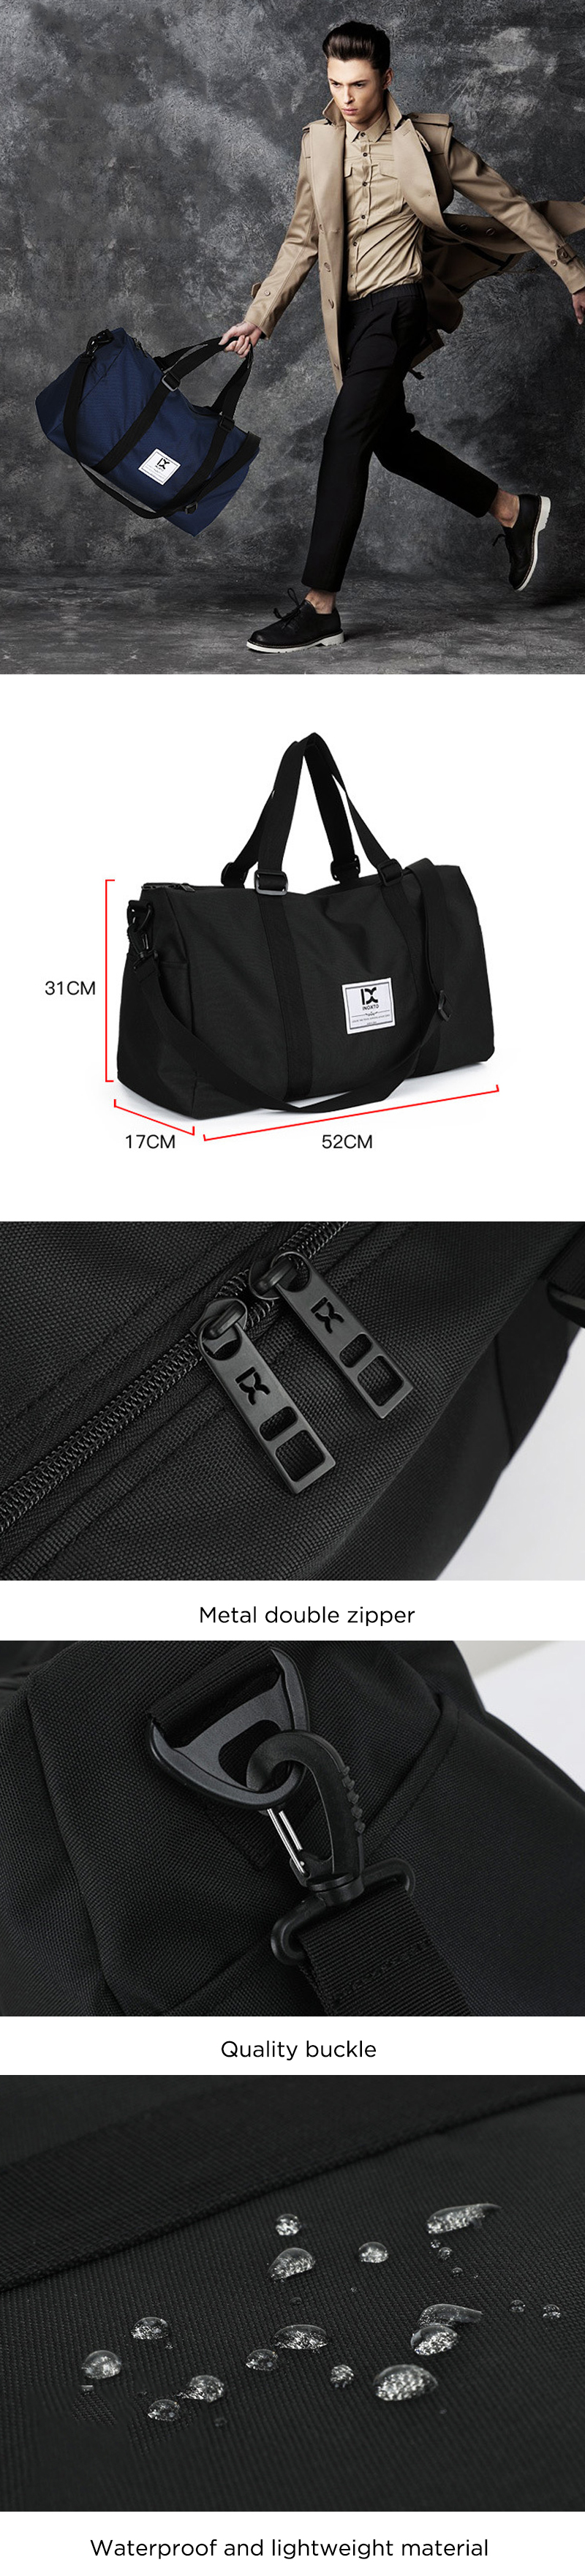 52x31x17cm-Travel-Boarding-Bag-Large-Capacity-Luggage-Handbag-Storage-Sports-Fitness-Yoga-Bag-1622741-1